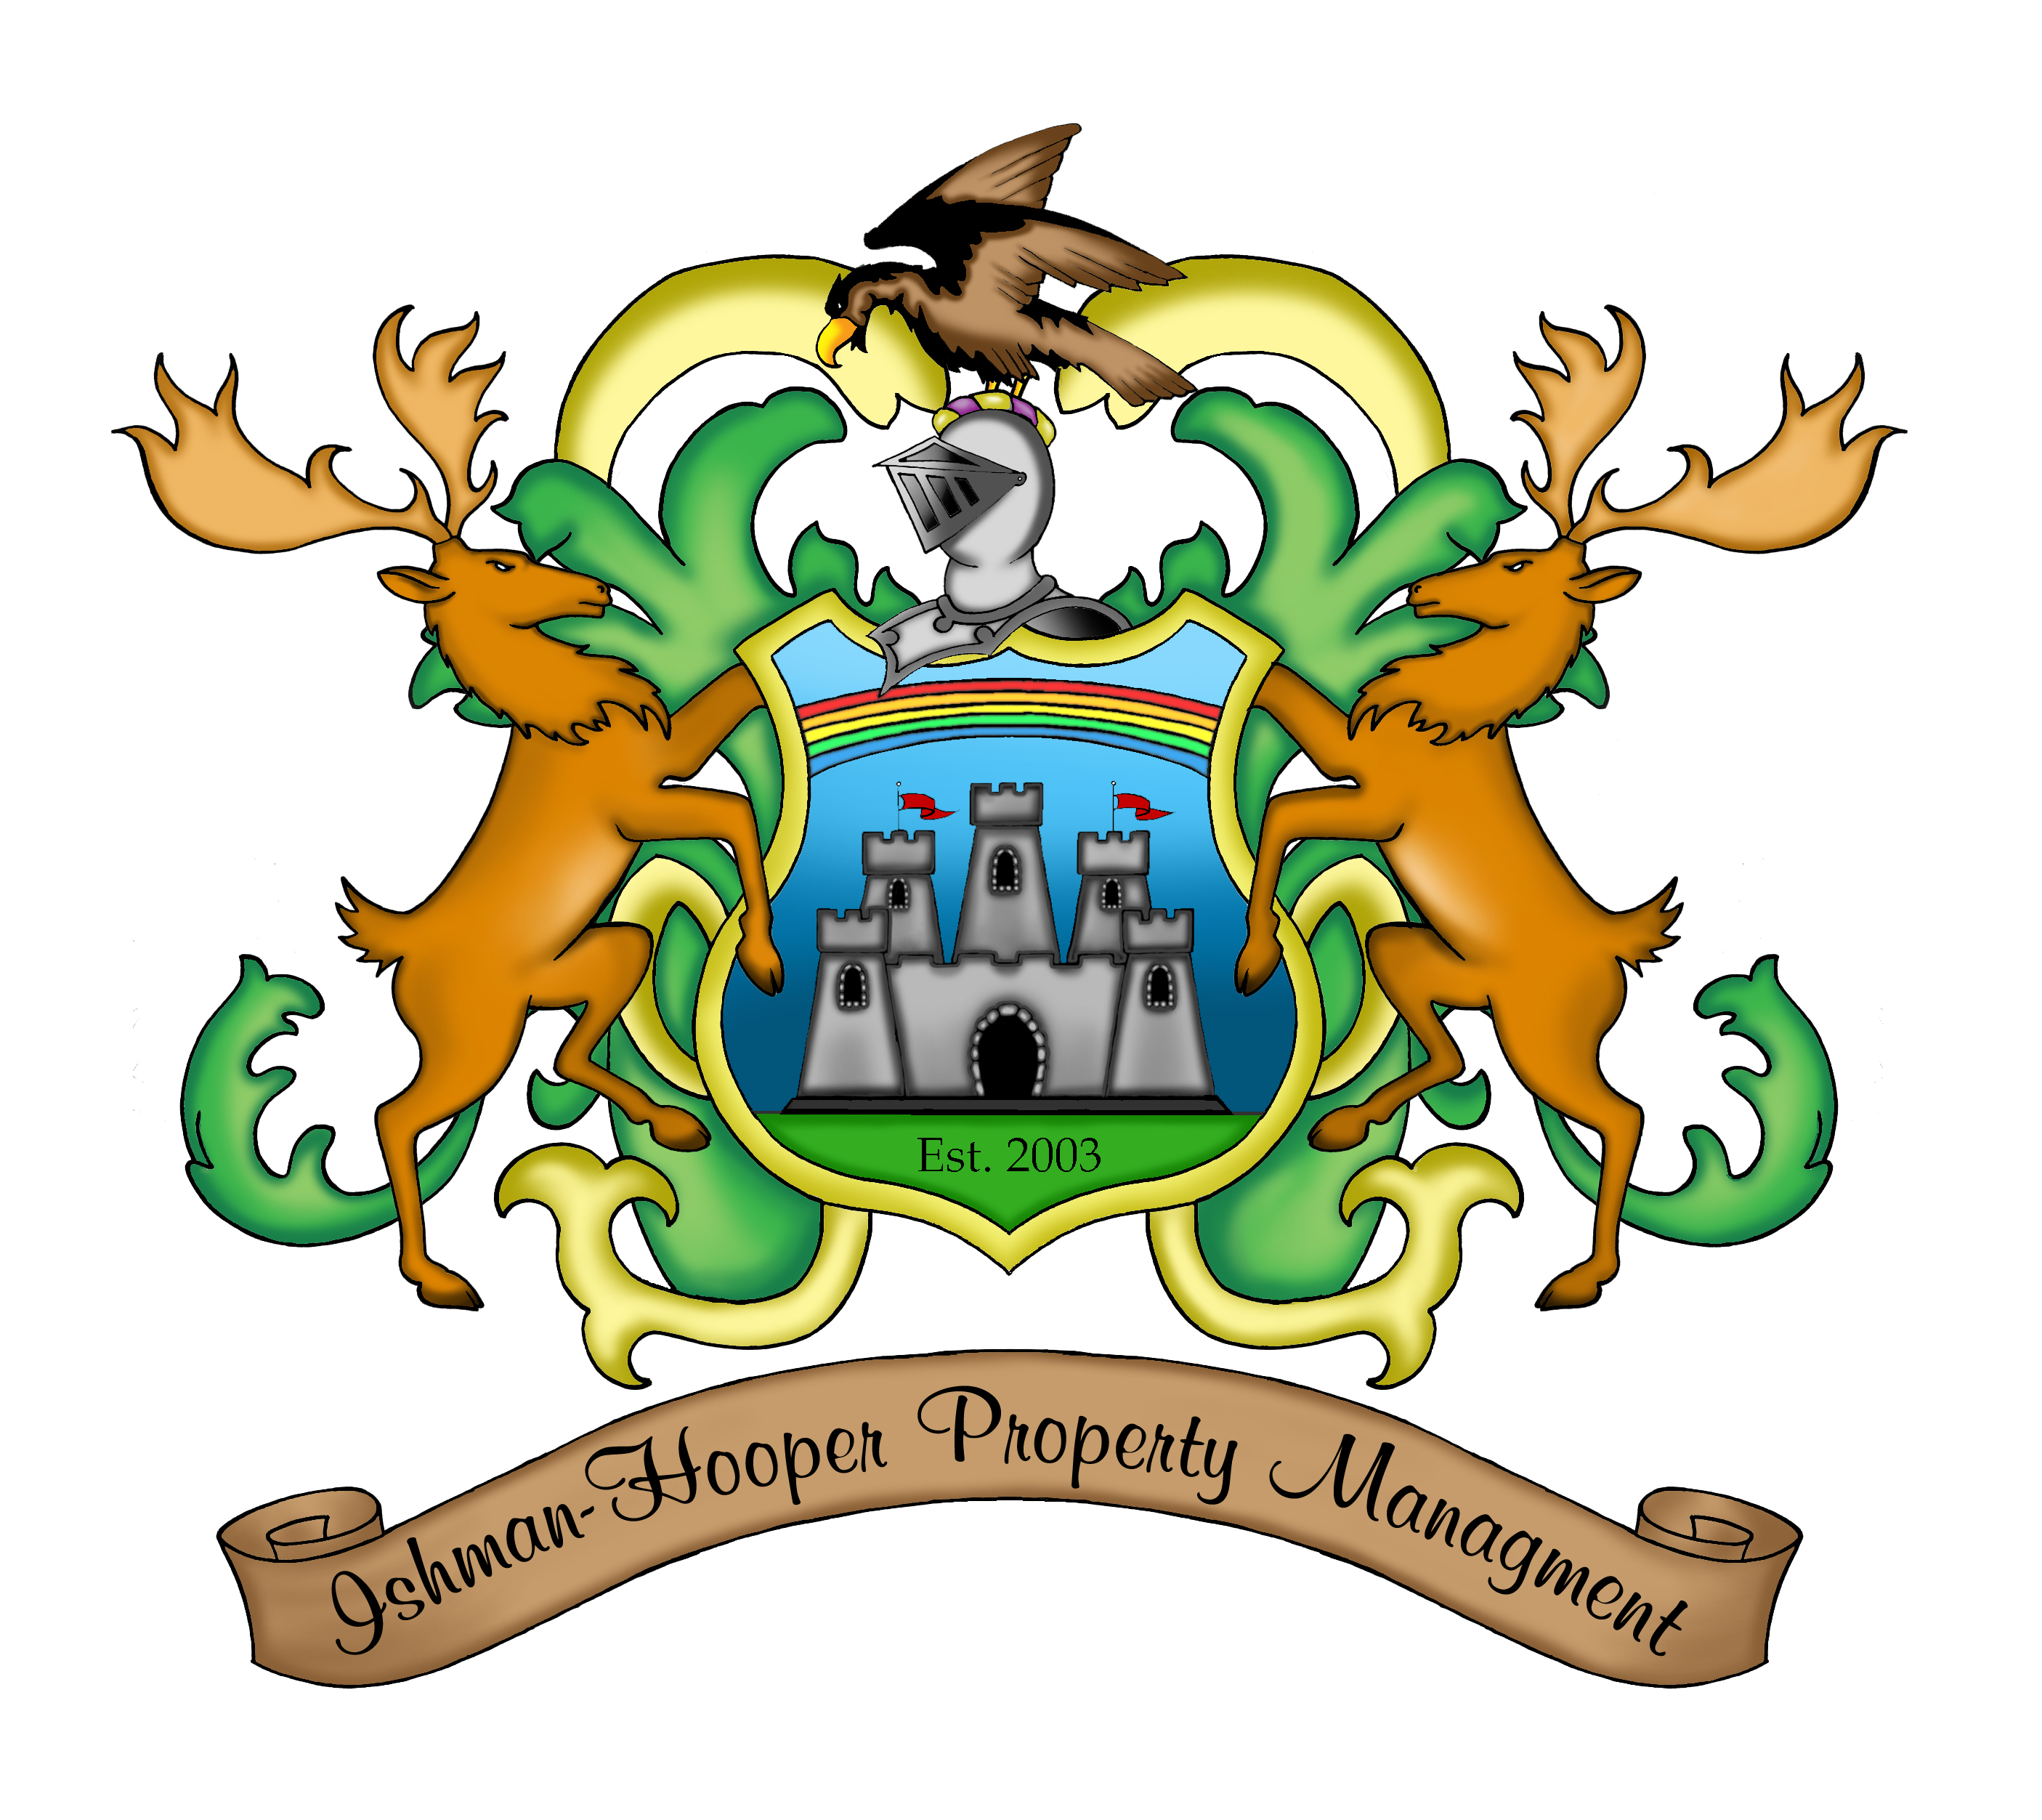 Ishman-Hooper Property Management Logo Crest (c) 2007